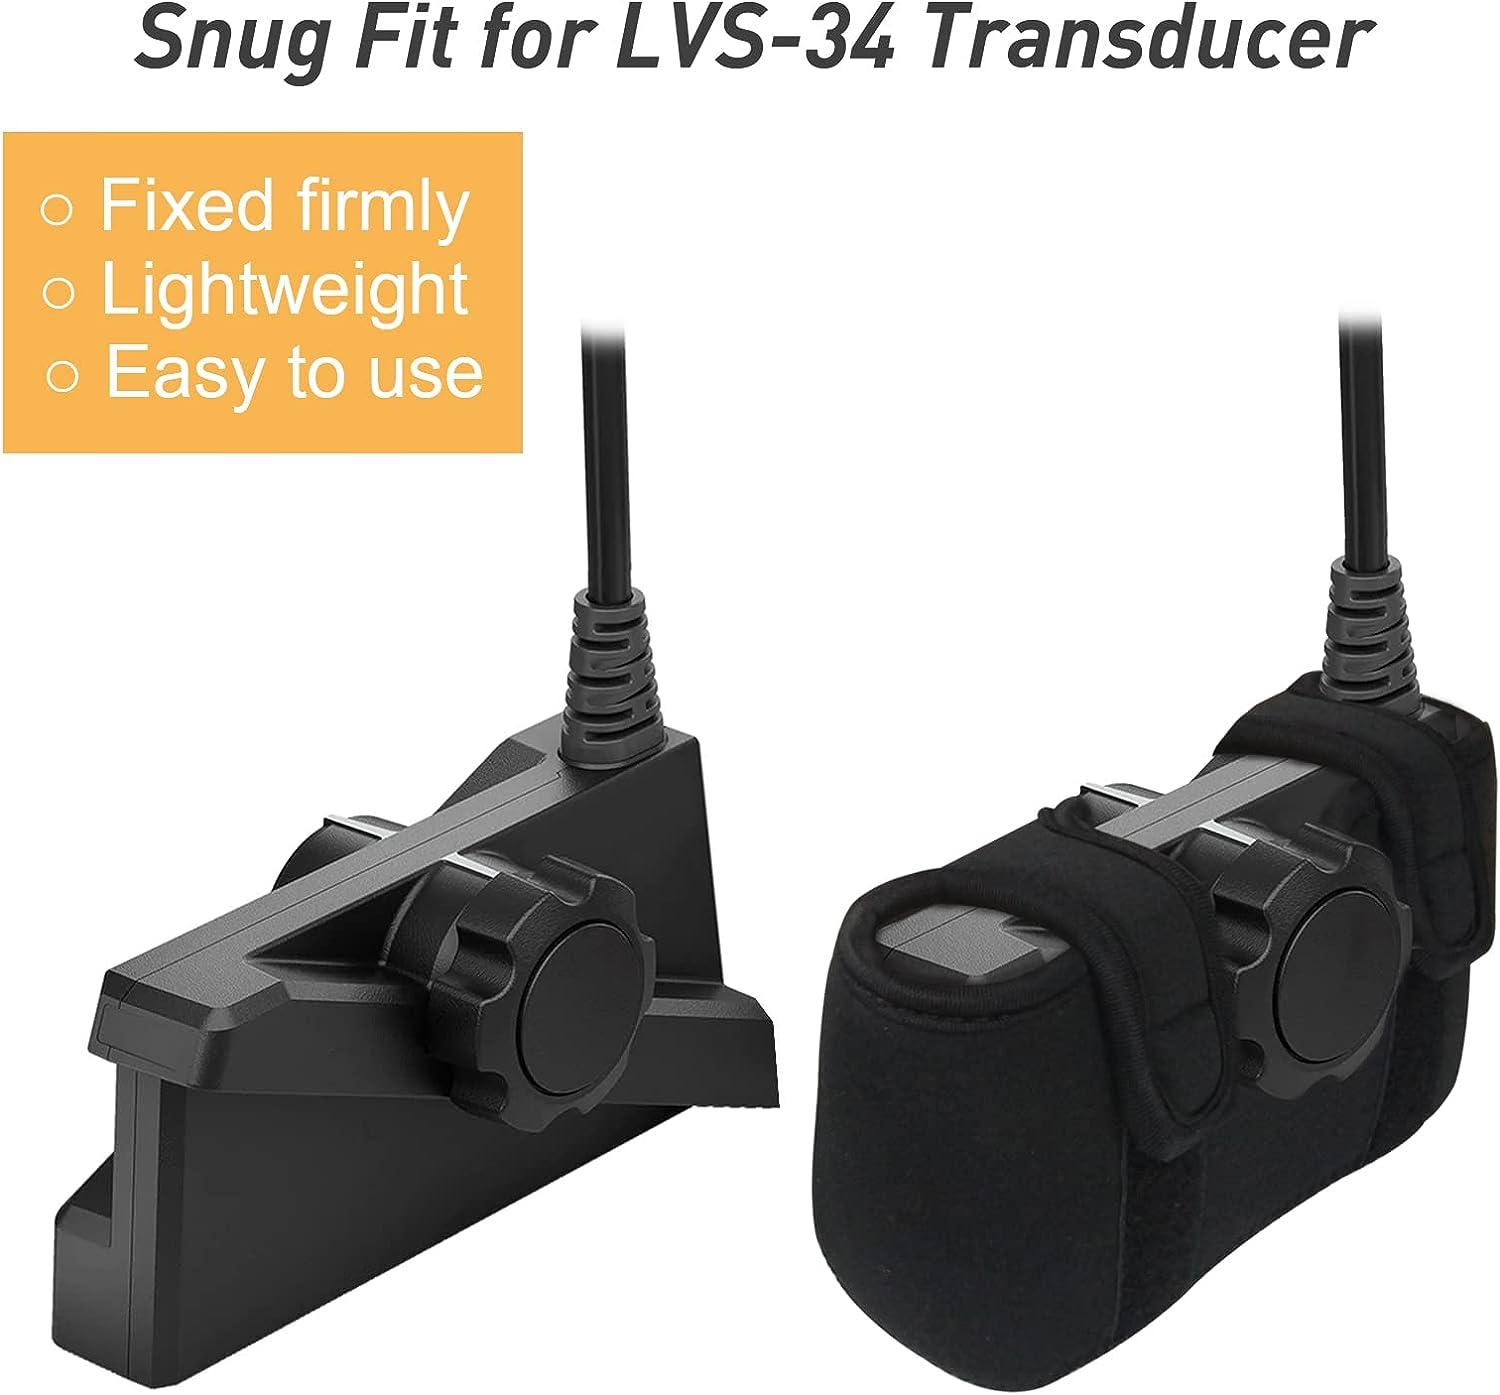 LVS34 Cover, Transducer Cover for Garmin Livescope Plus LVS34, Underwater  Live Sonar Transducer Protective Cover